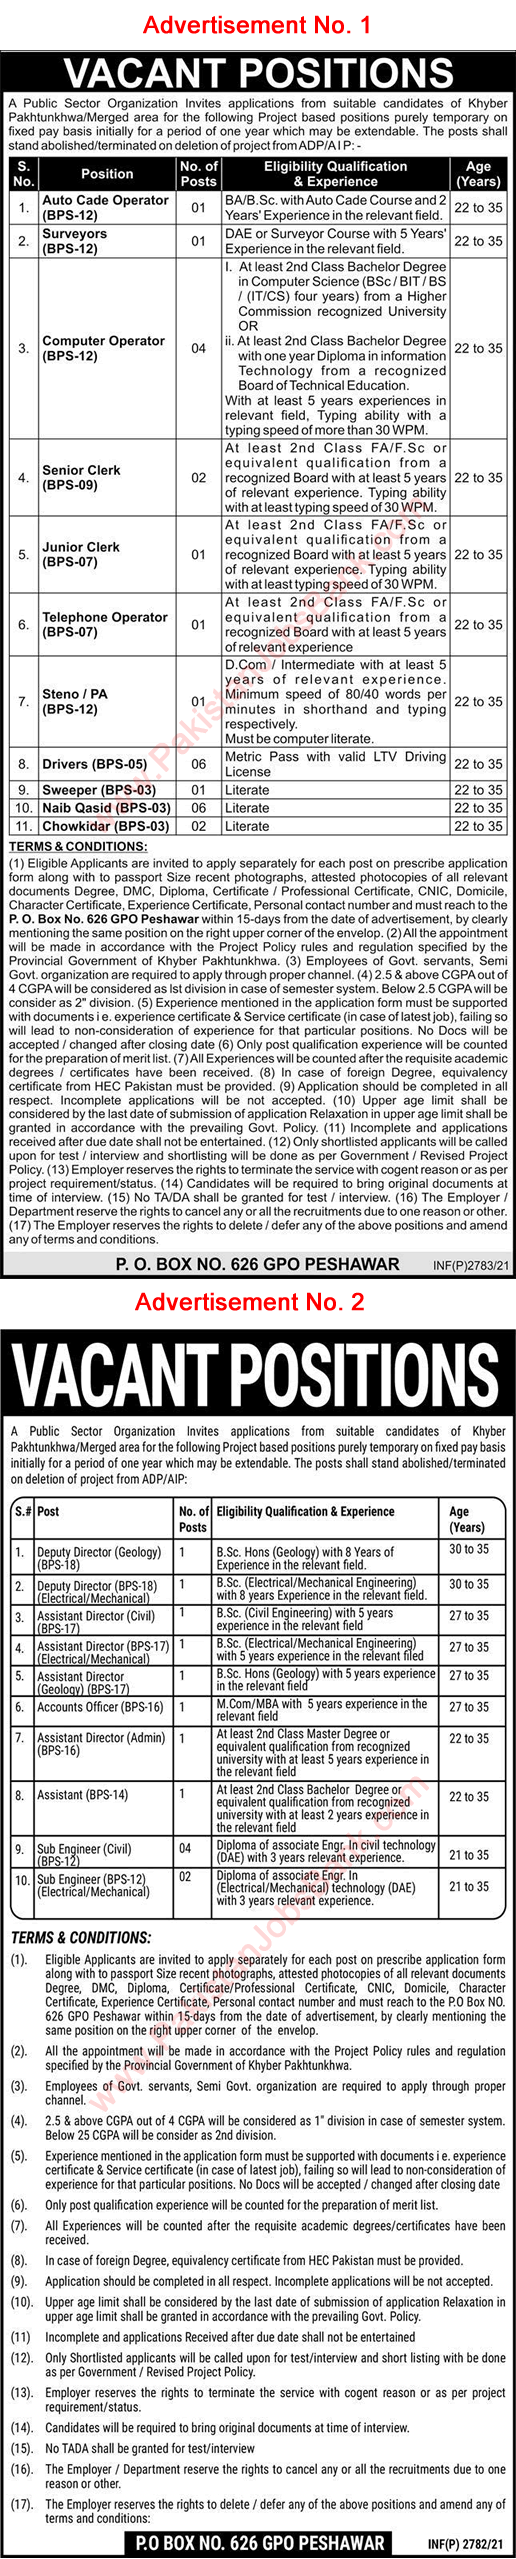 PO Box 626 GPO Peshawar Jobs 2021 June Public Sector Organization Latest